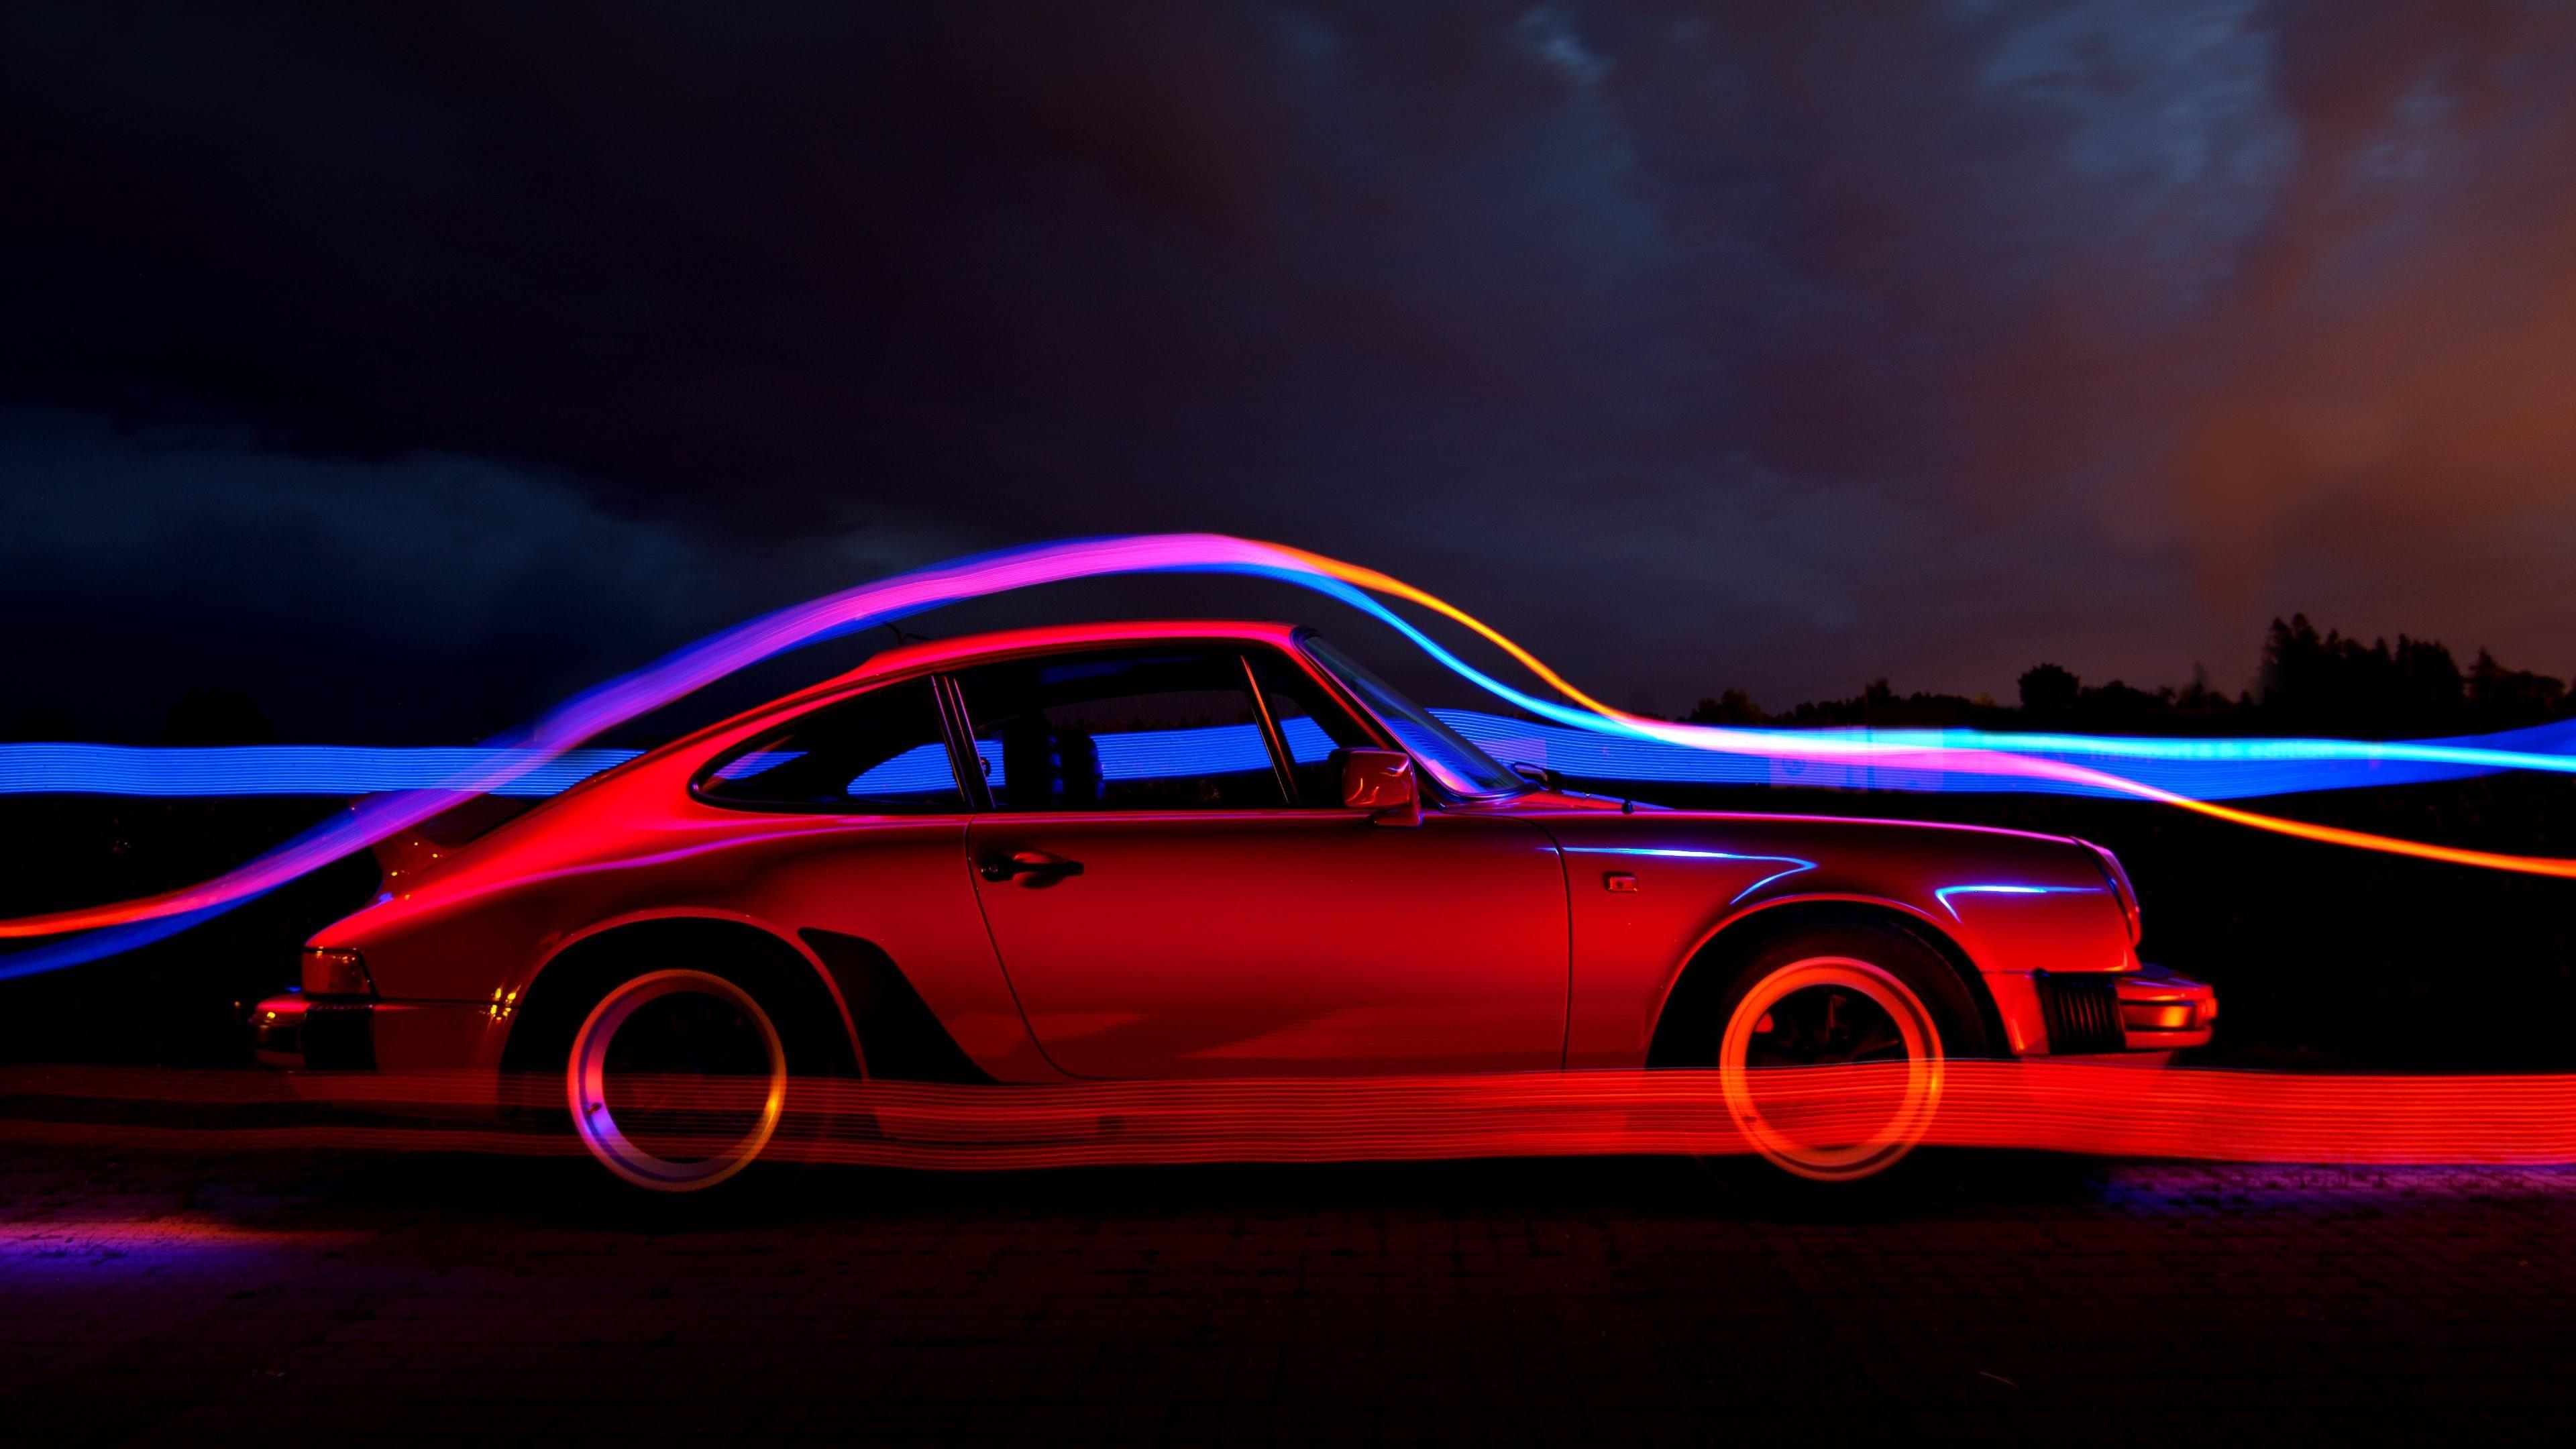 Awesome Luminous Porsche 911 Wallpaper. Wallpaper Studio 10. Tens